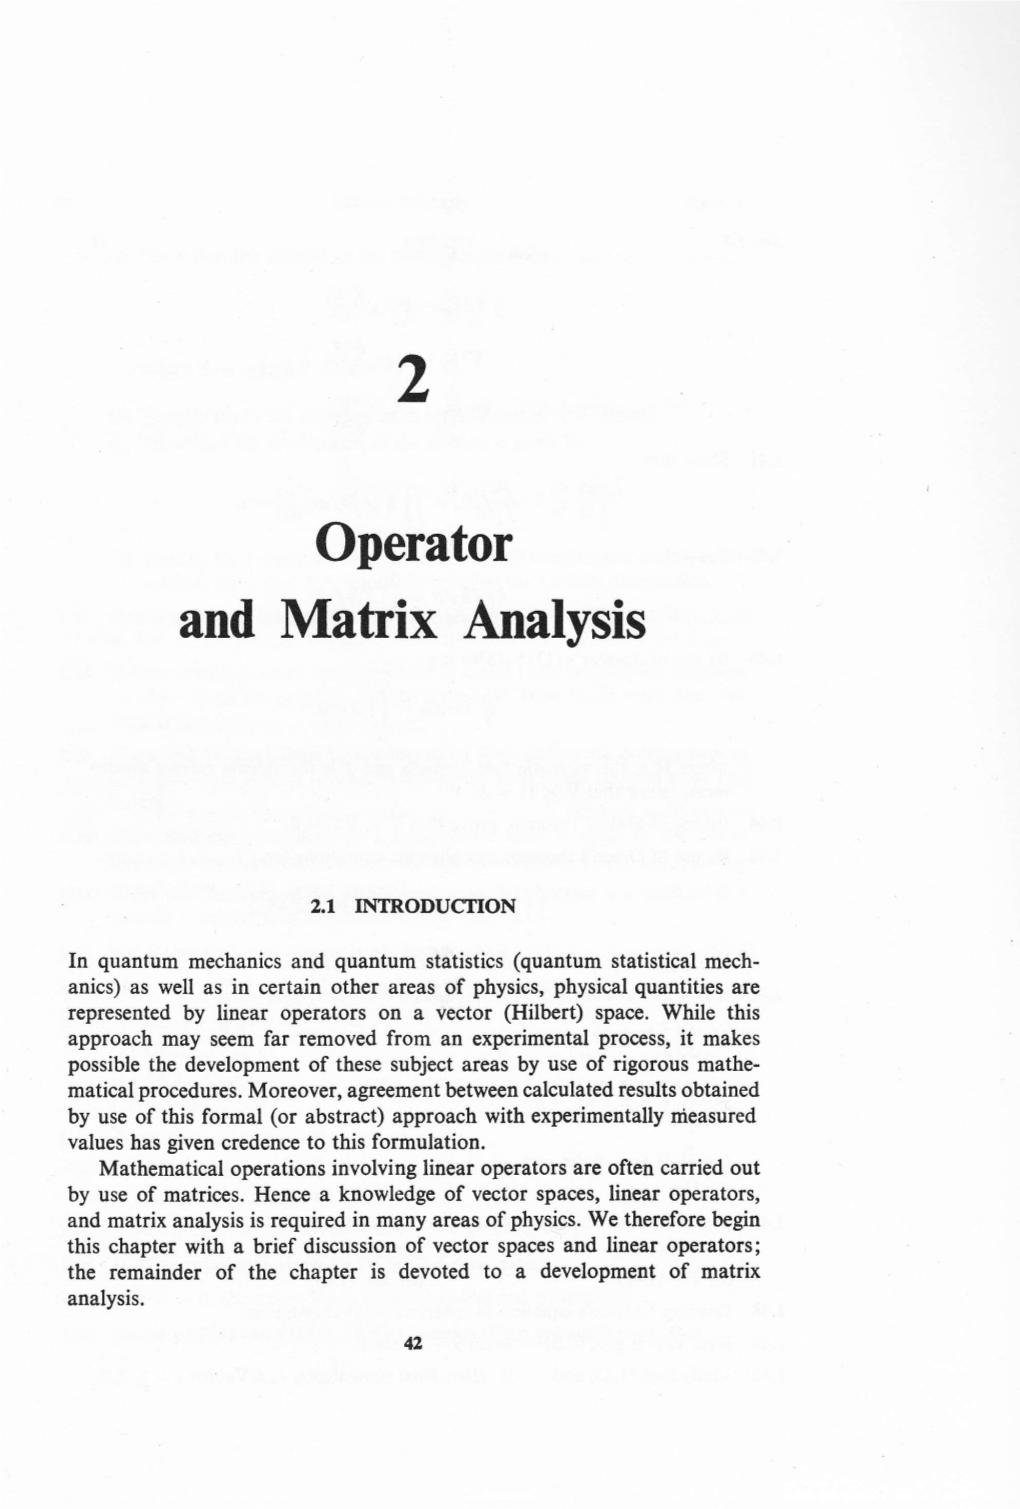 Operator and Matrix Analysis